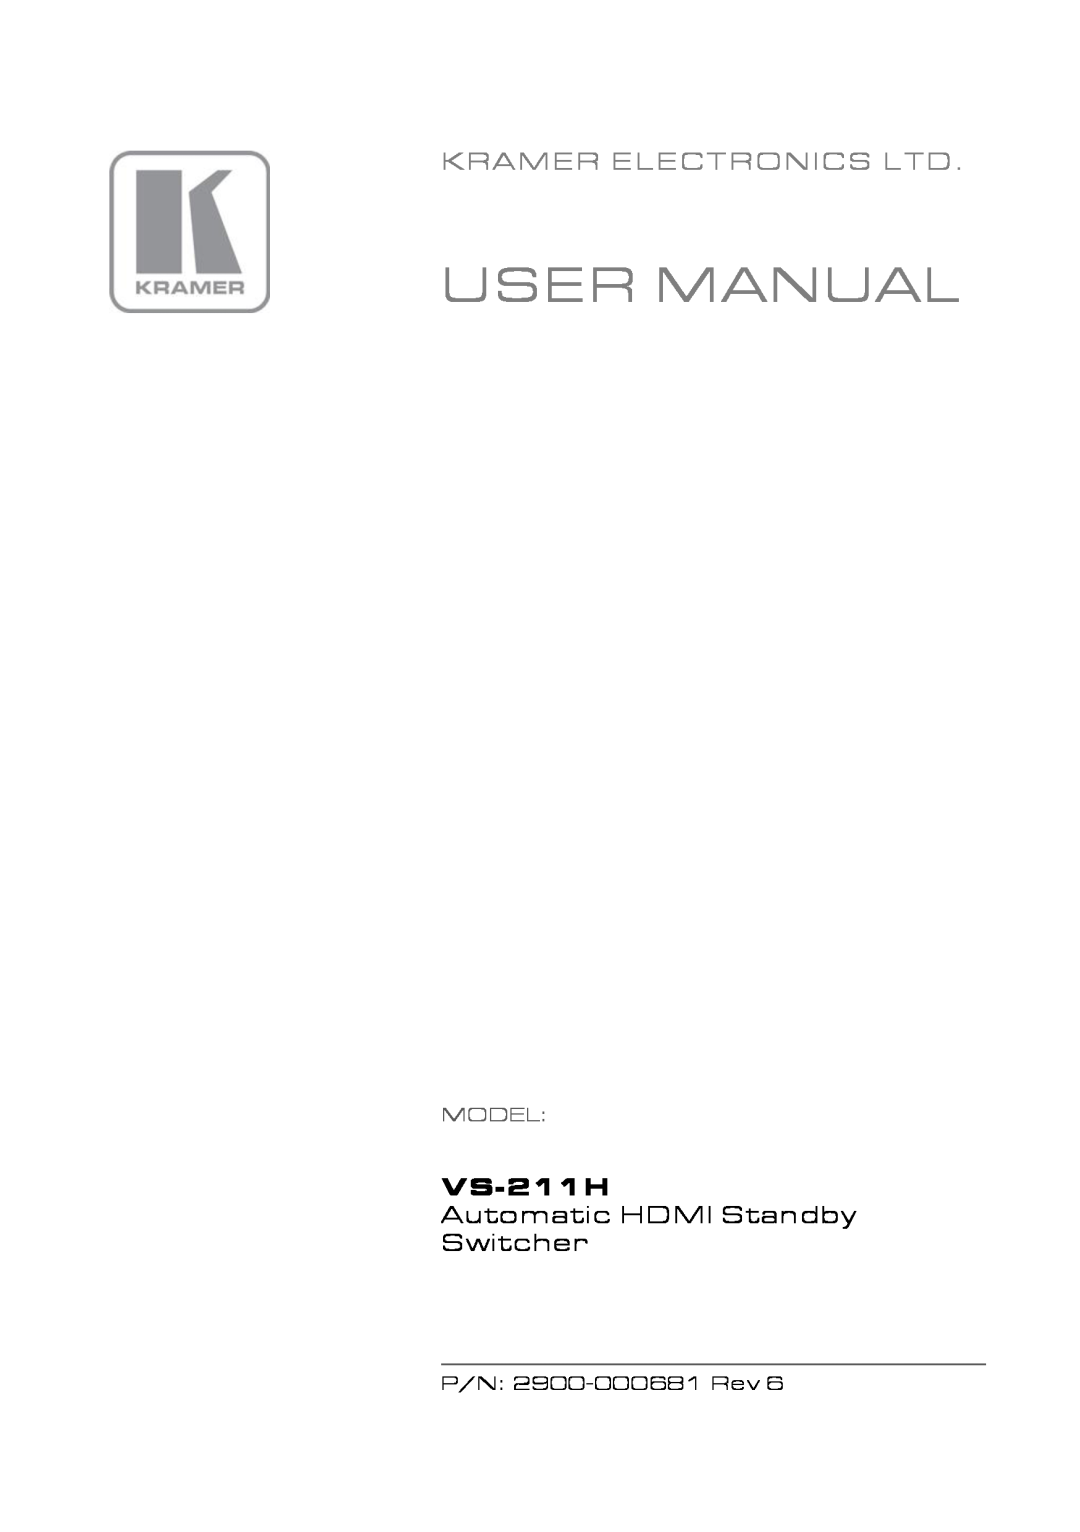 Kramer Electronics VS-211H user manual User Manual, Automatic HDMI Standby Switcher, Model 